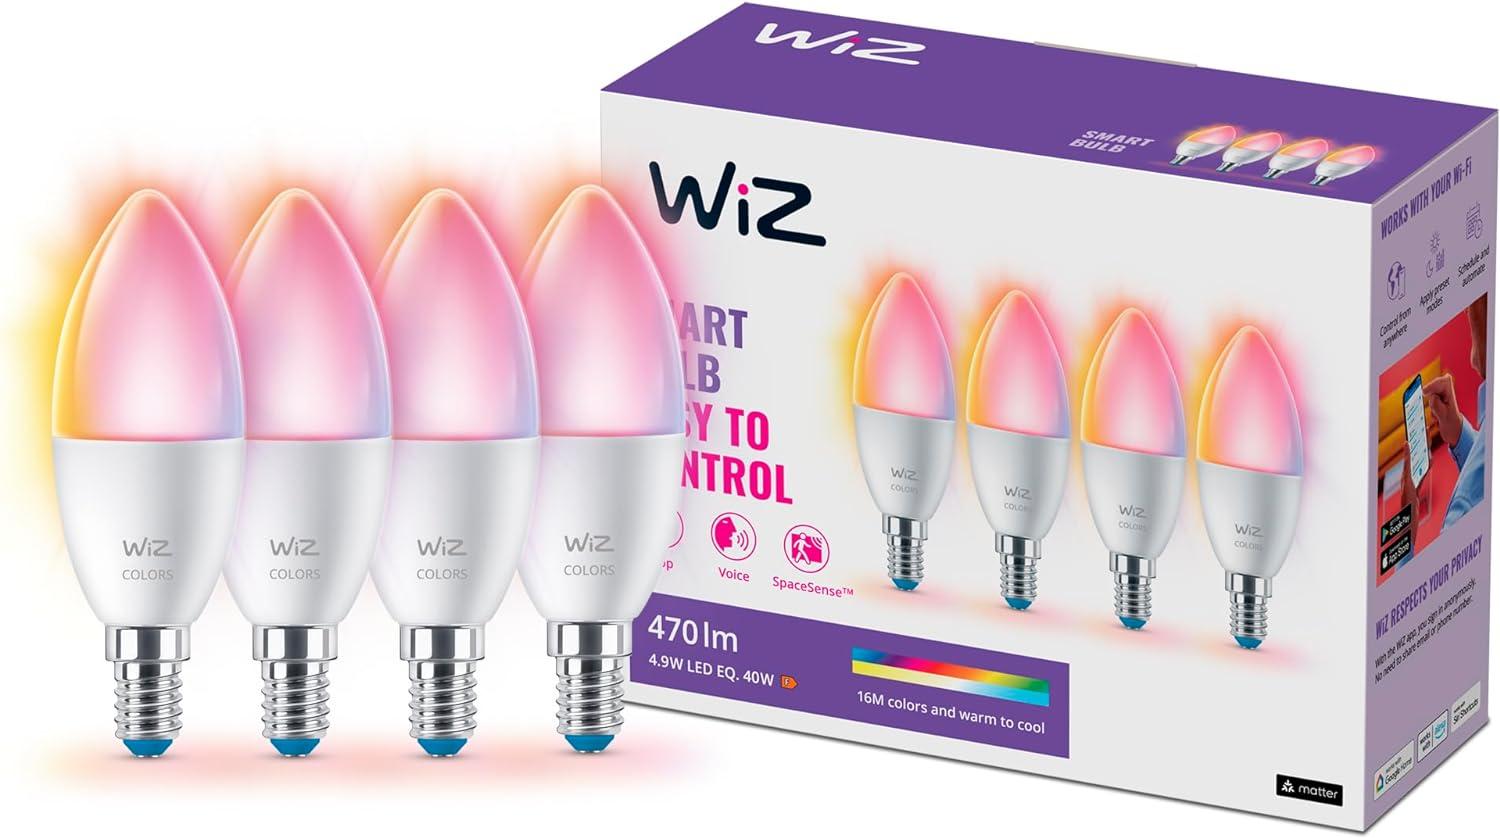 WiZ E14 LED Lampe Tunable White & Color, dimmbar, 40W, 16 Mio. Farben, smarte Steuerung per App/Stimme über WLAN, Viererpack Bild 1